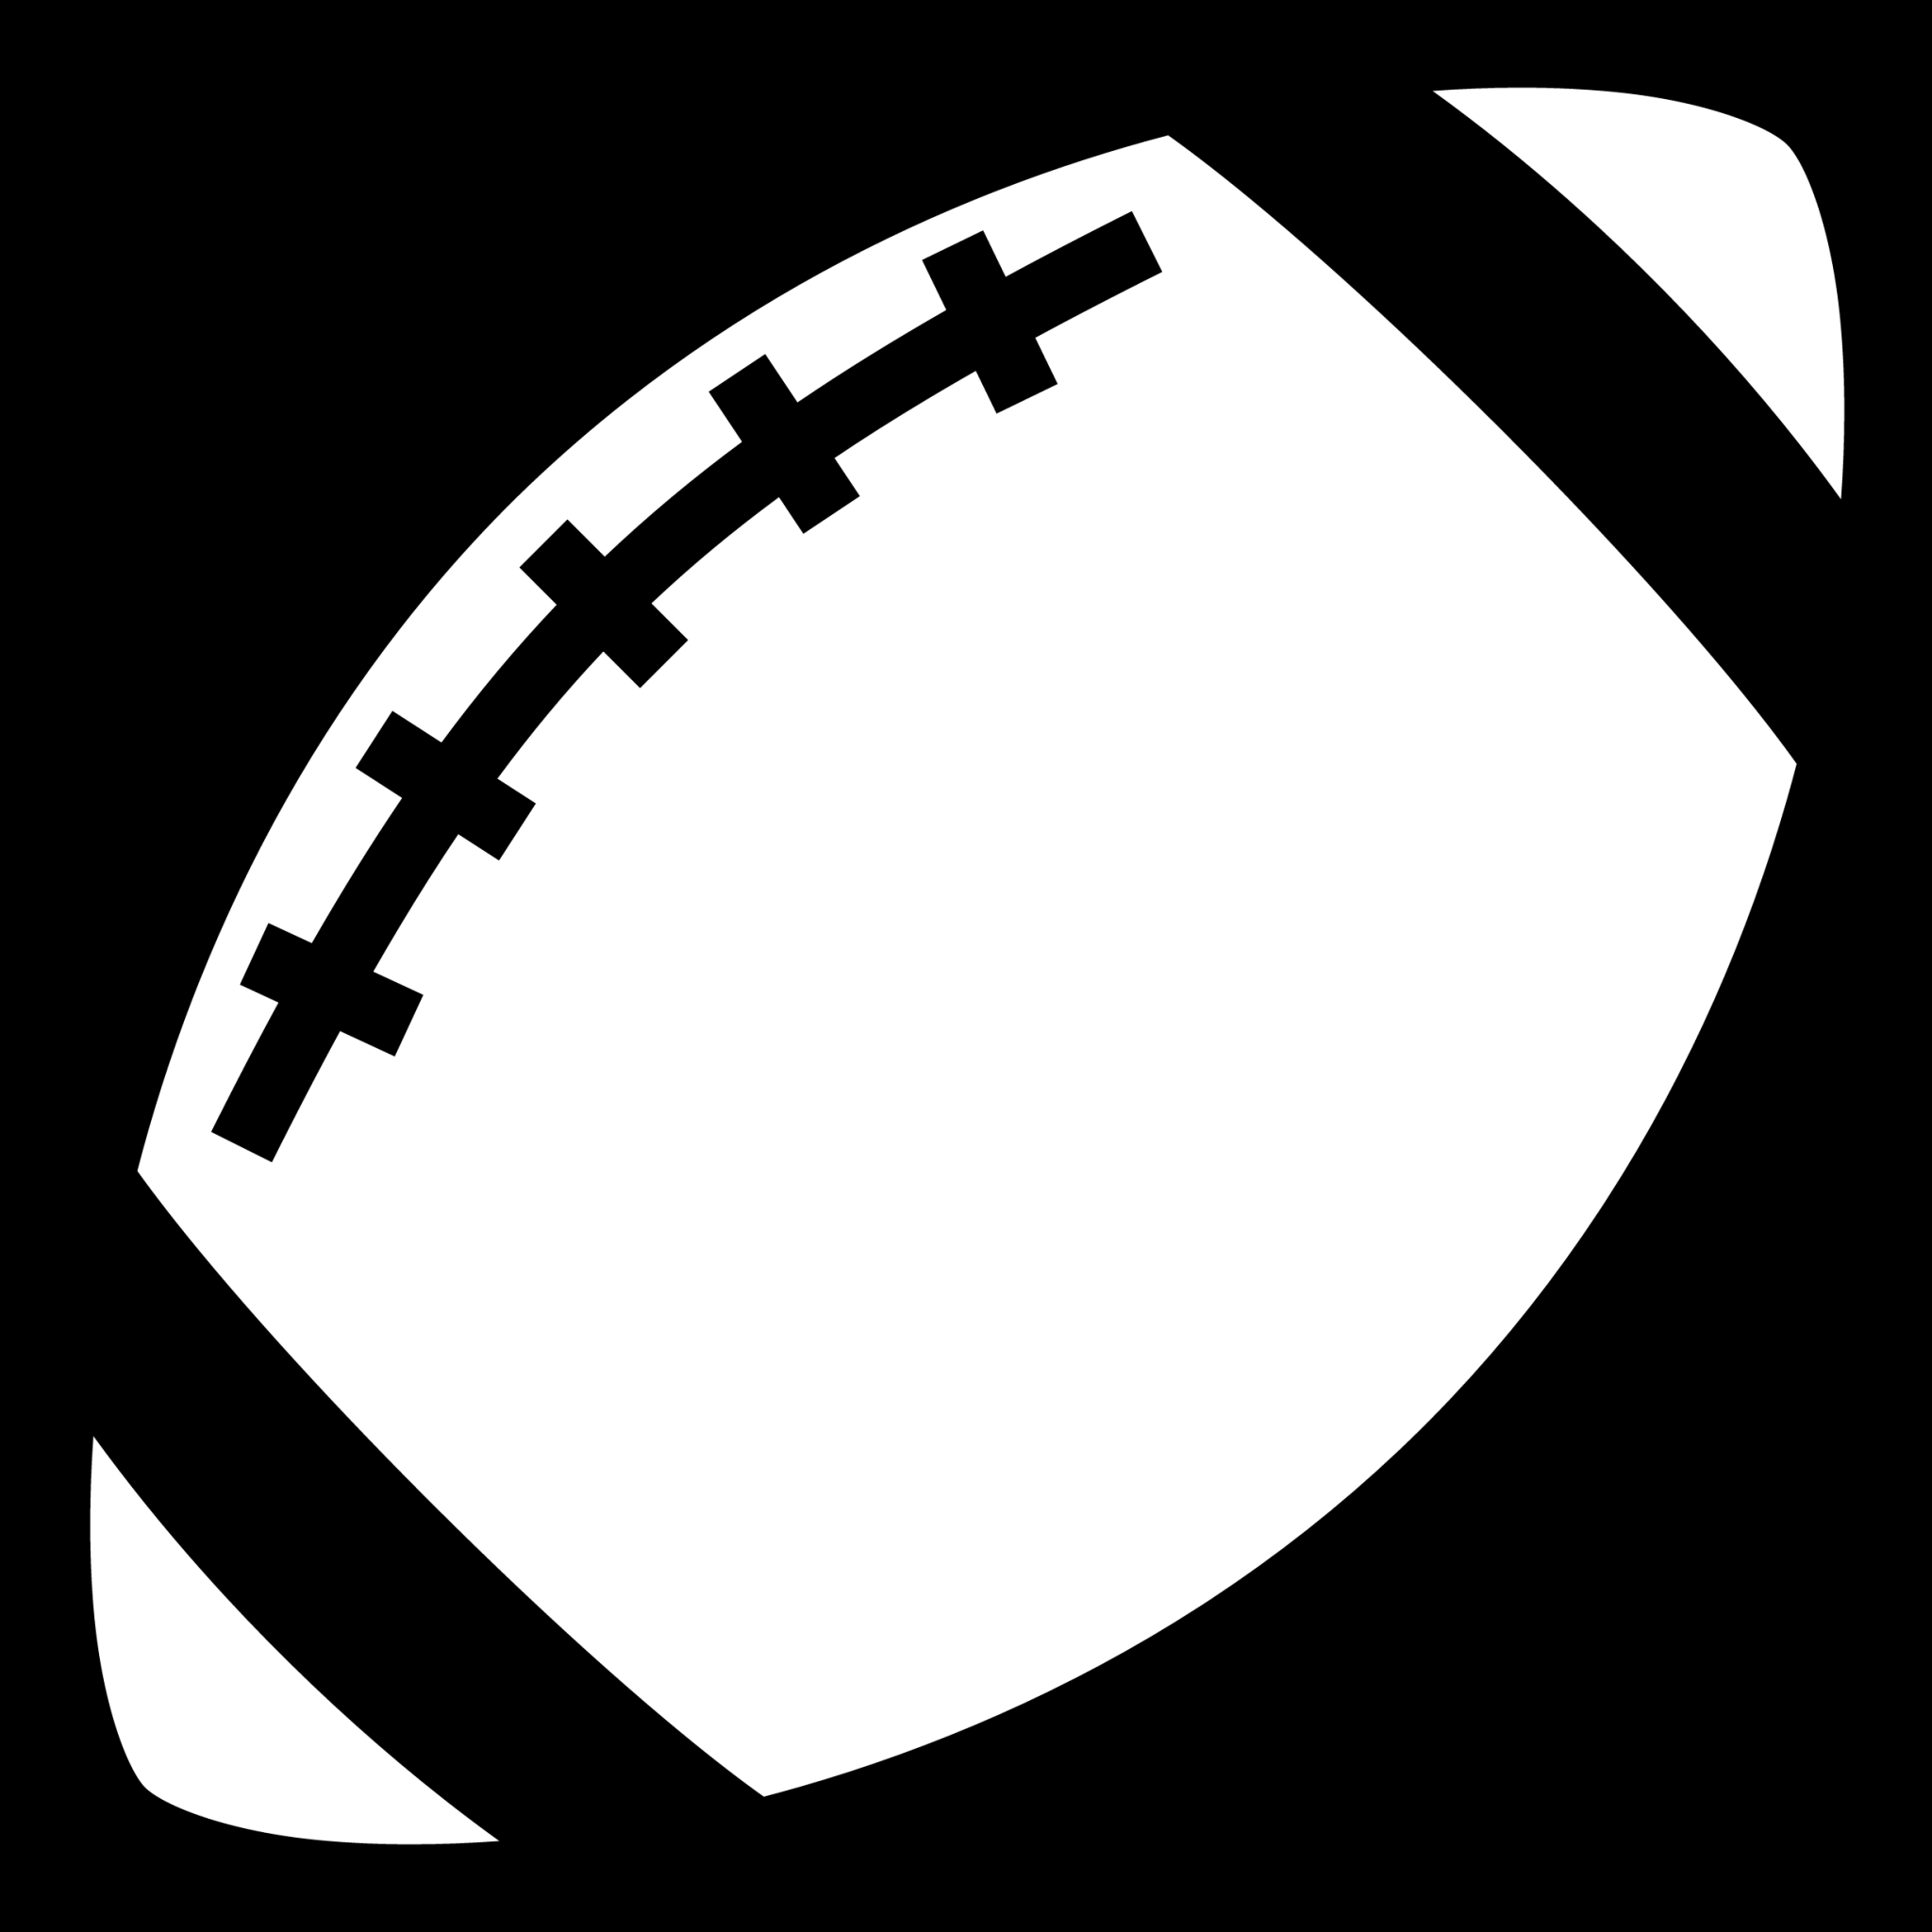 american football symbol